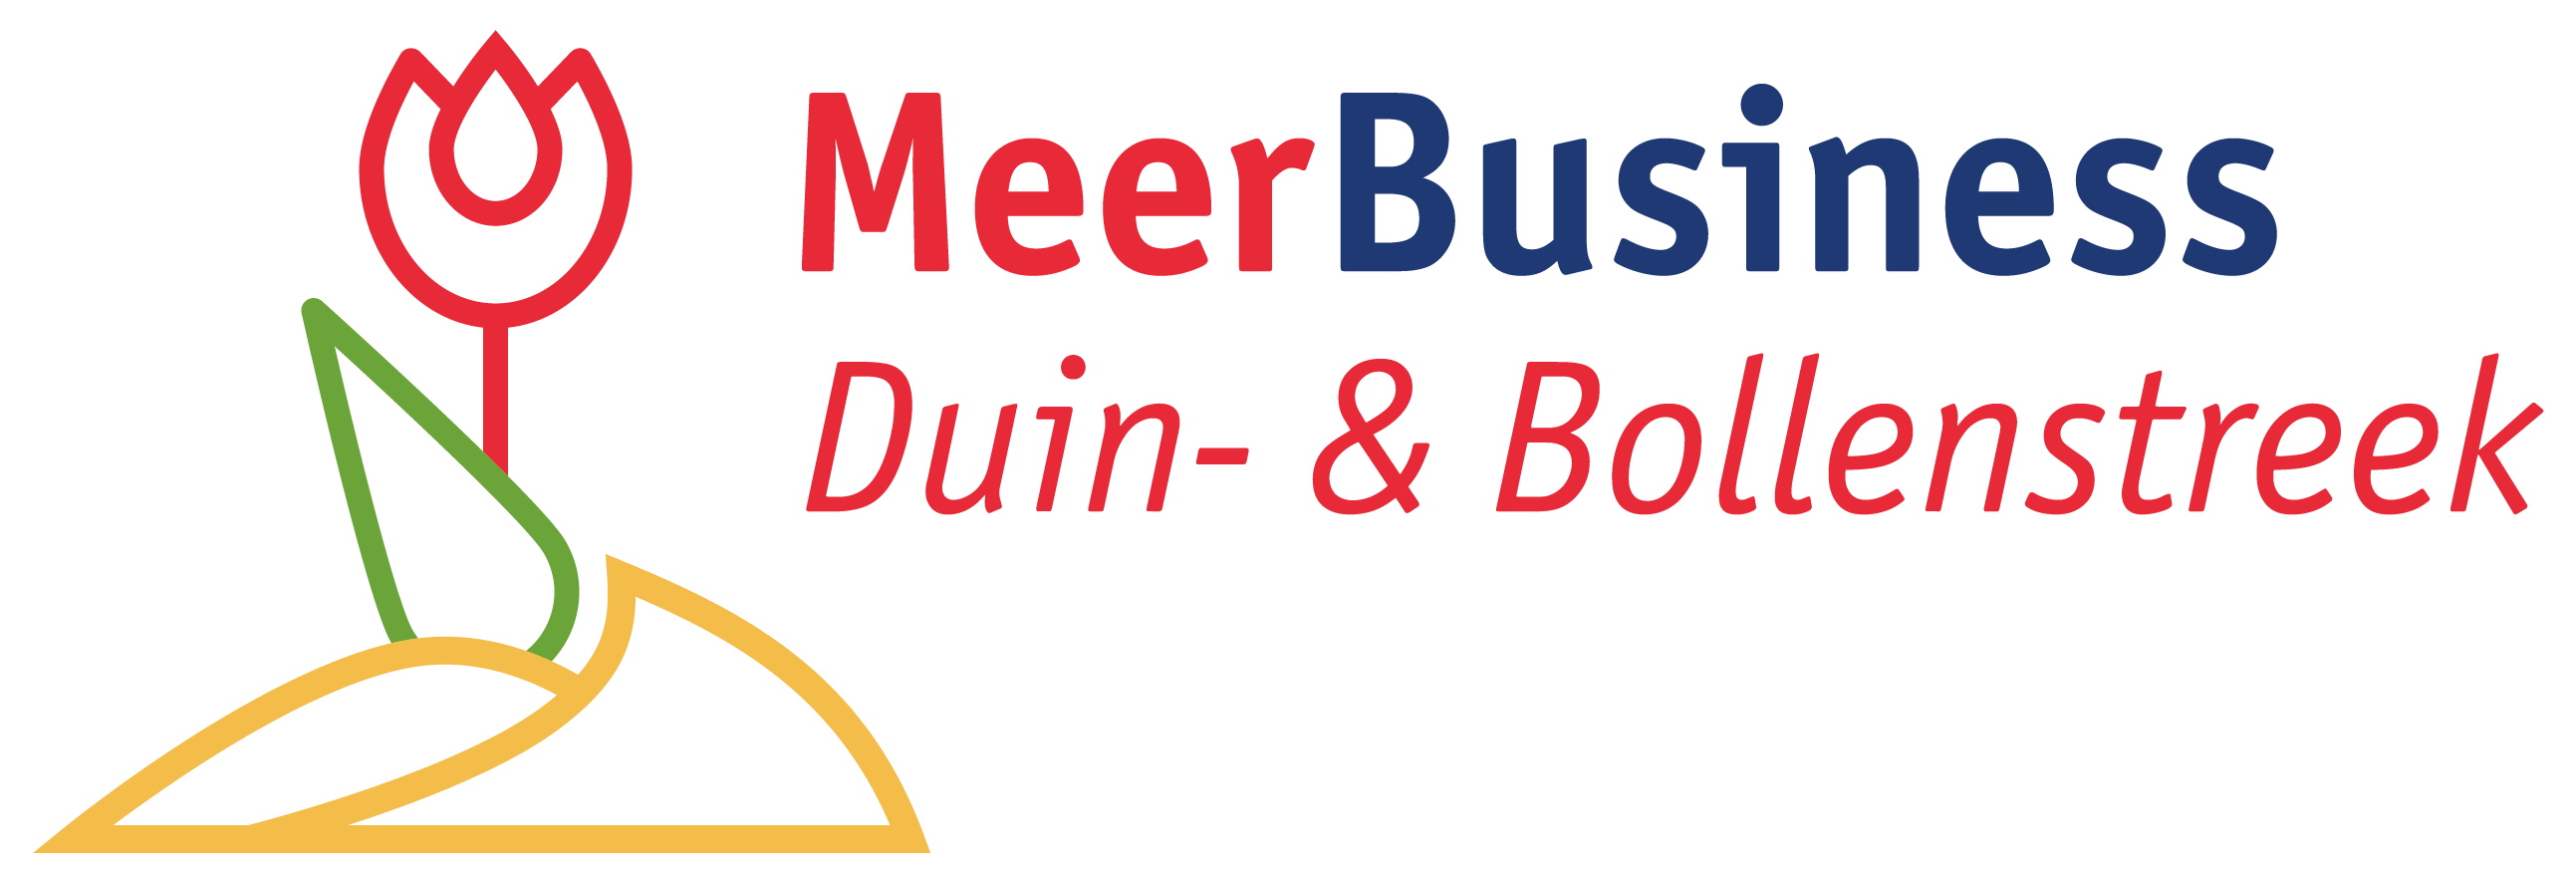 Business Bollenstreek_Combi logo_01